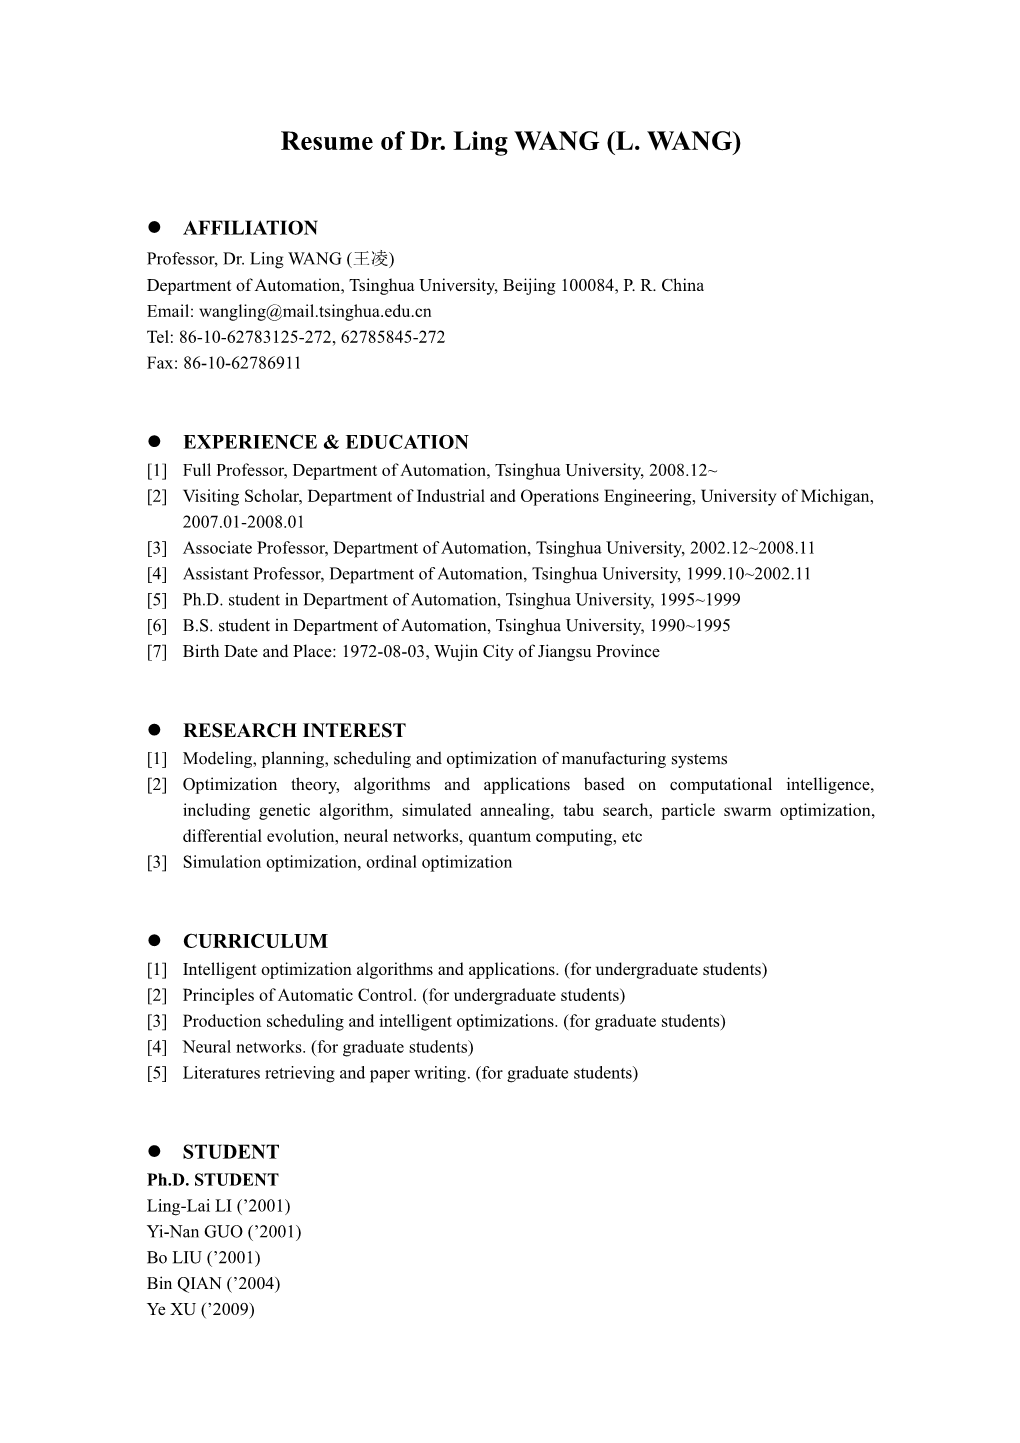 Resume of Ling Wang (L